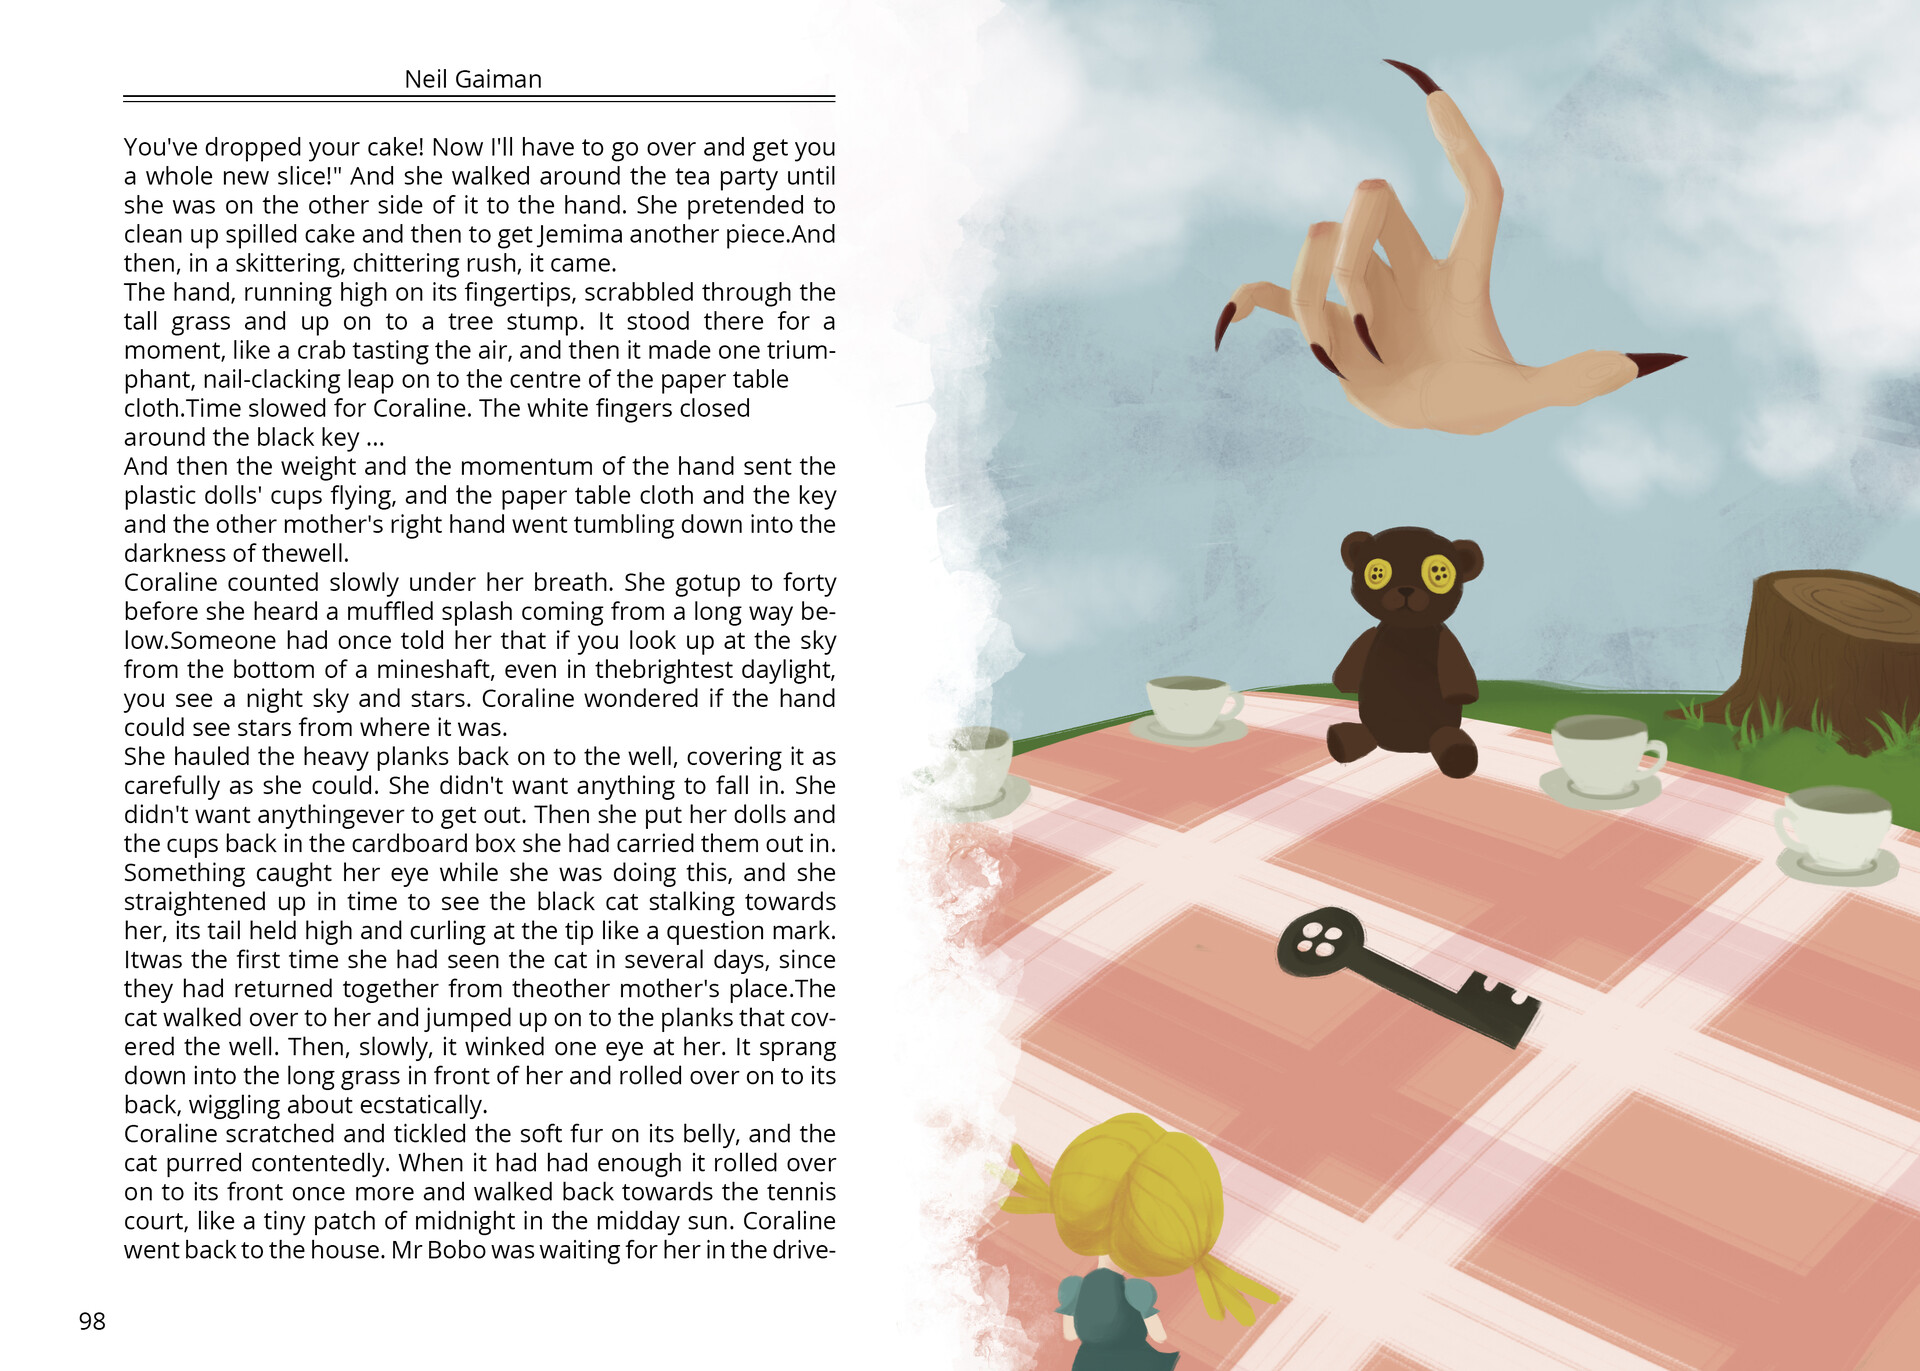 ArtStation - Neil Gaiman's Coraline book illustrations